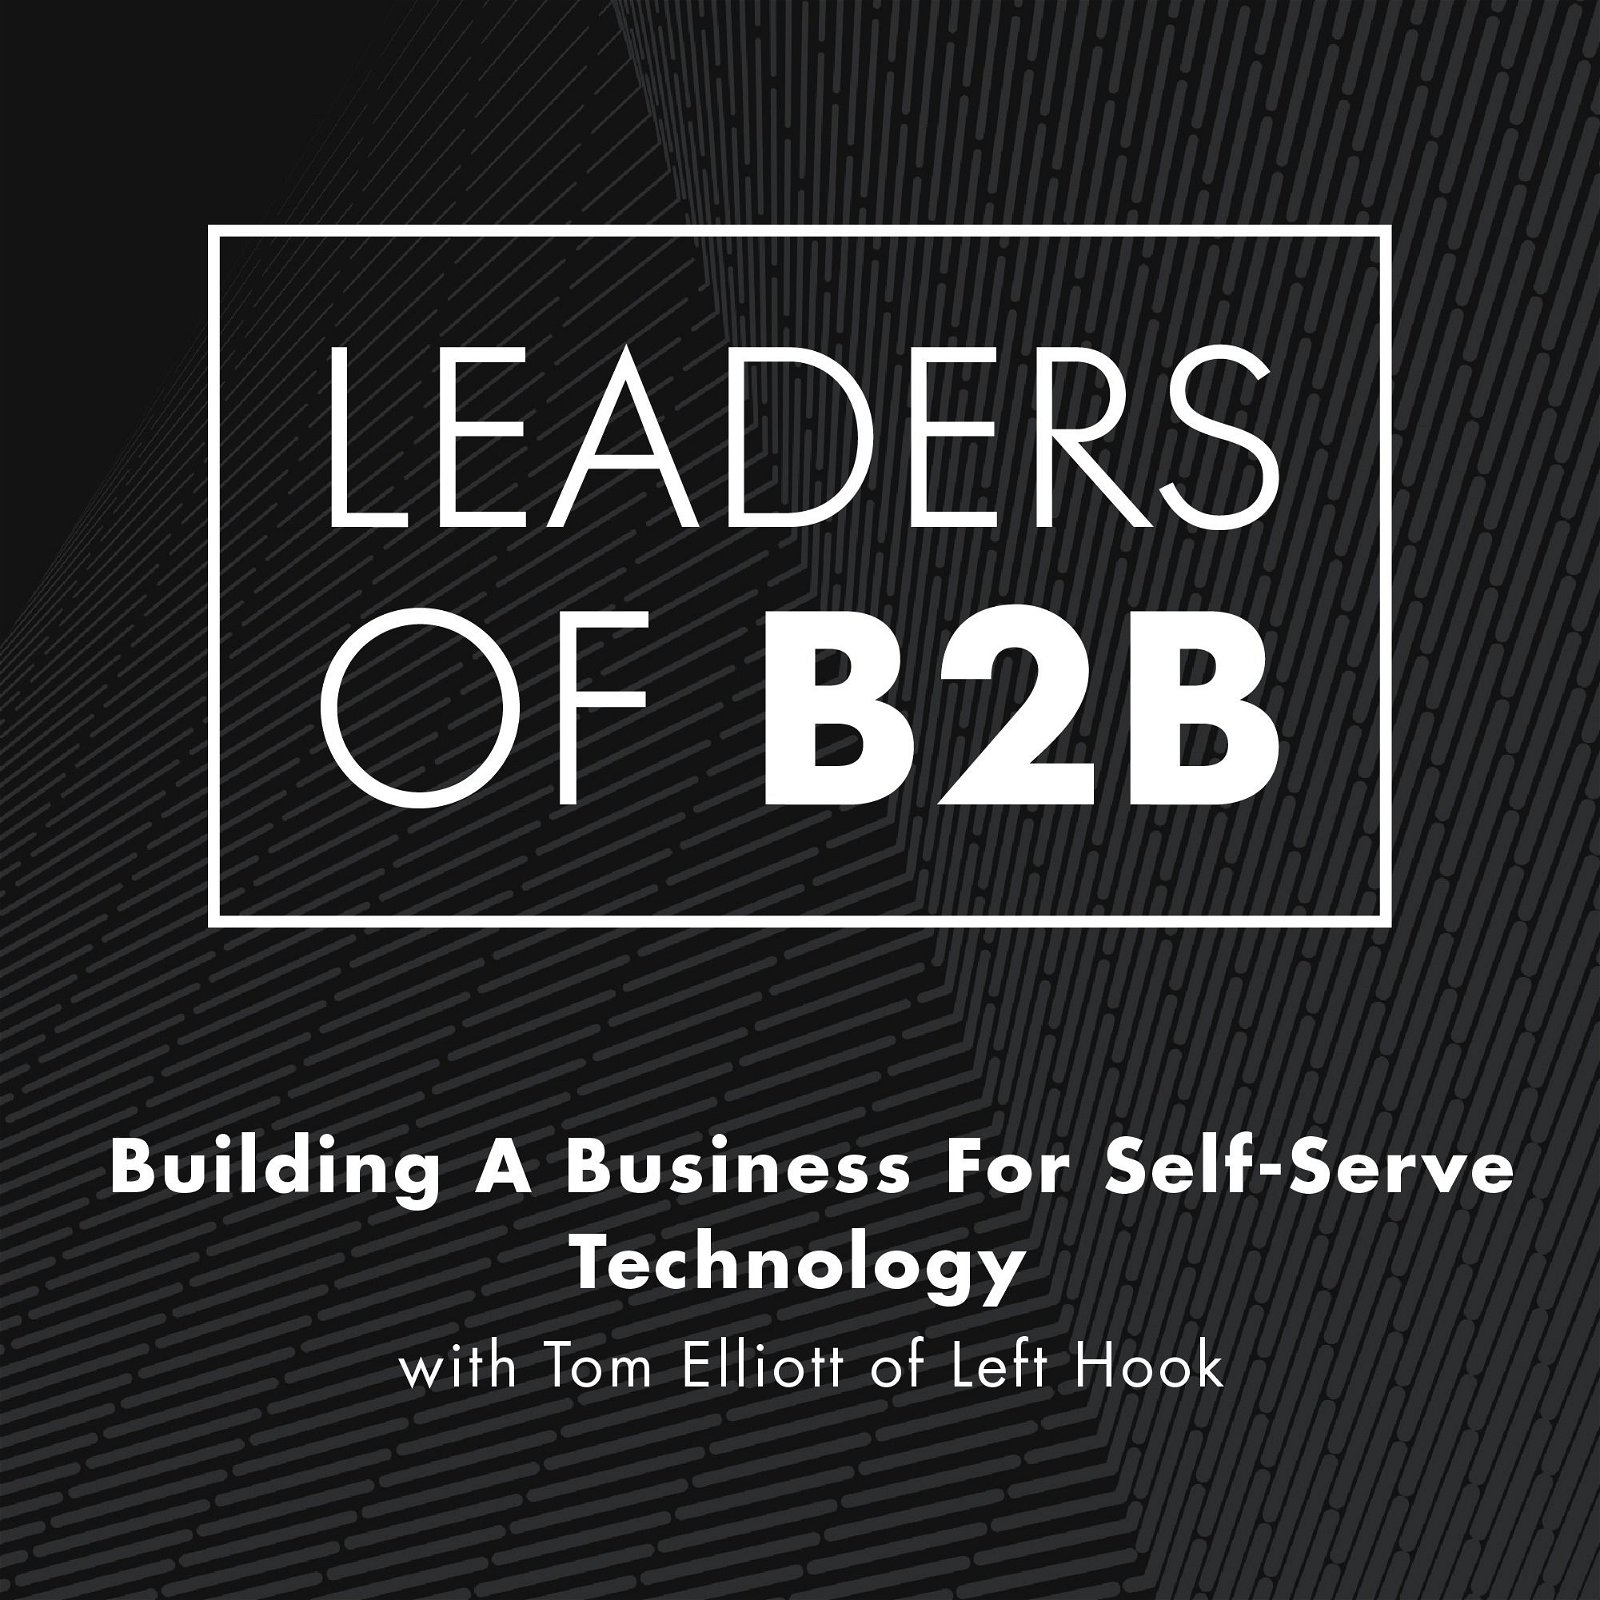 Building A Business For Self-Serve Technology With Tom Elliott of Left Hook